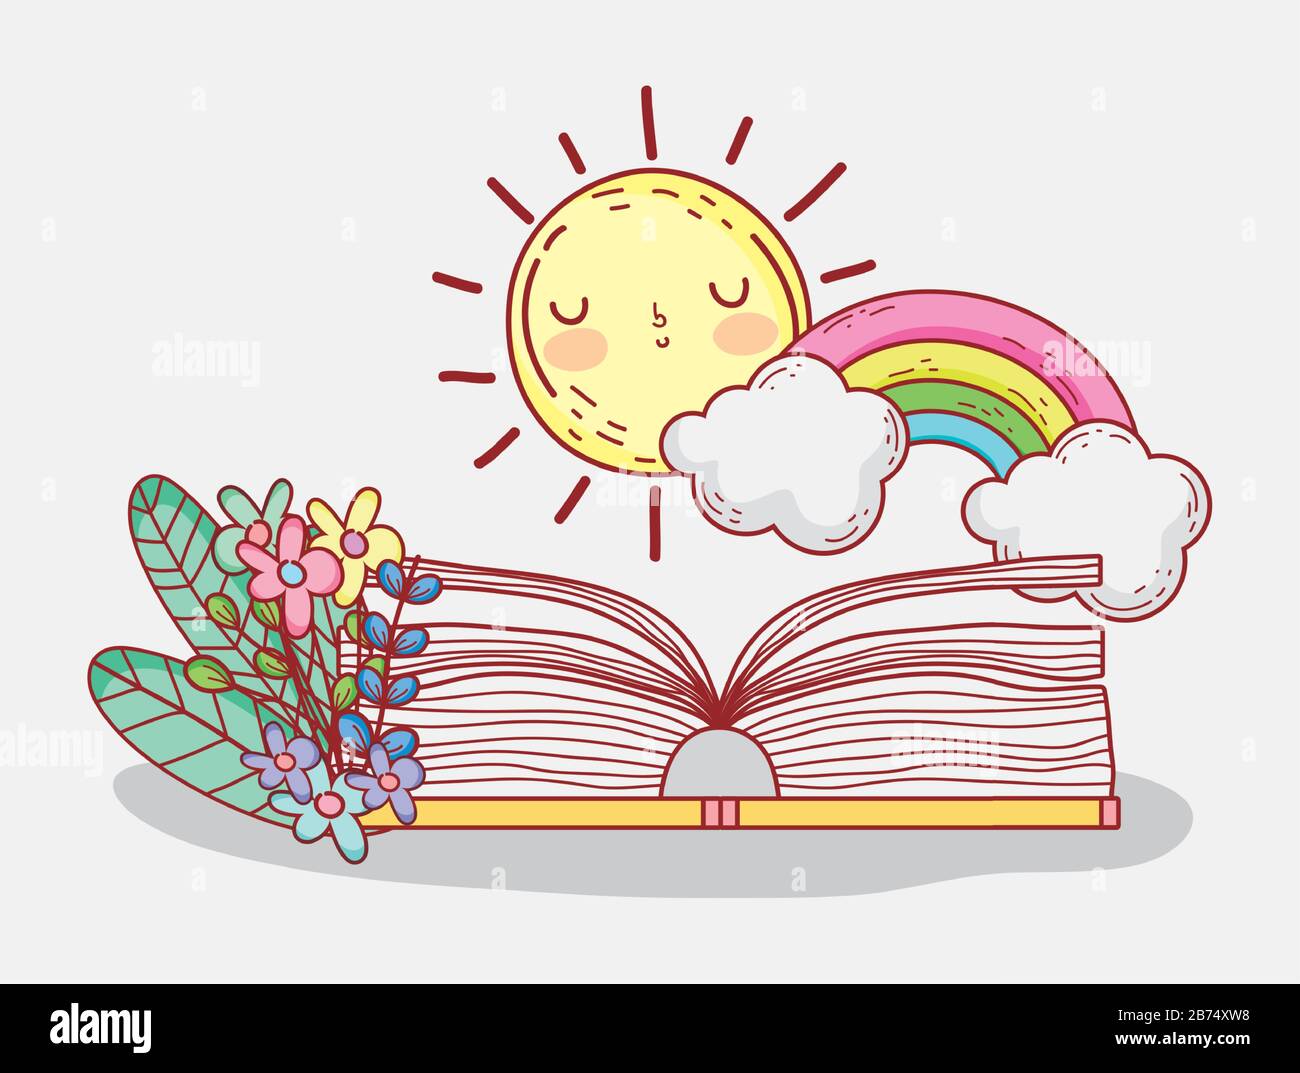 colorful open book clip art